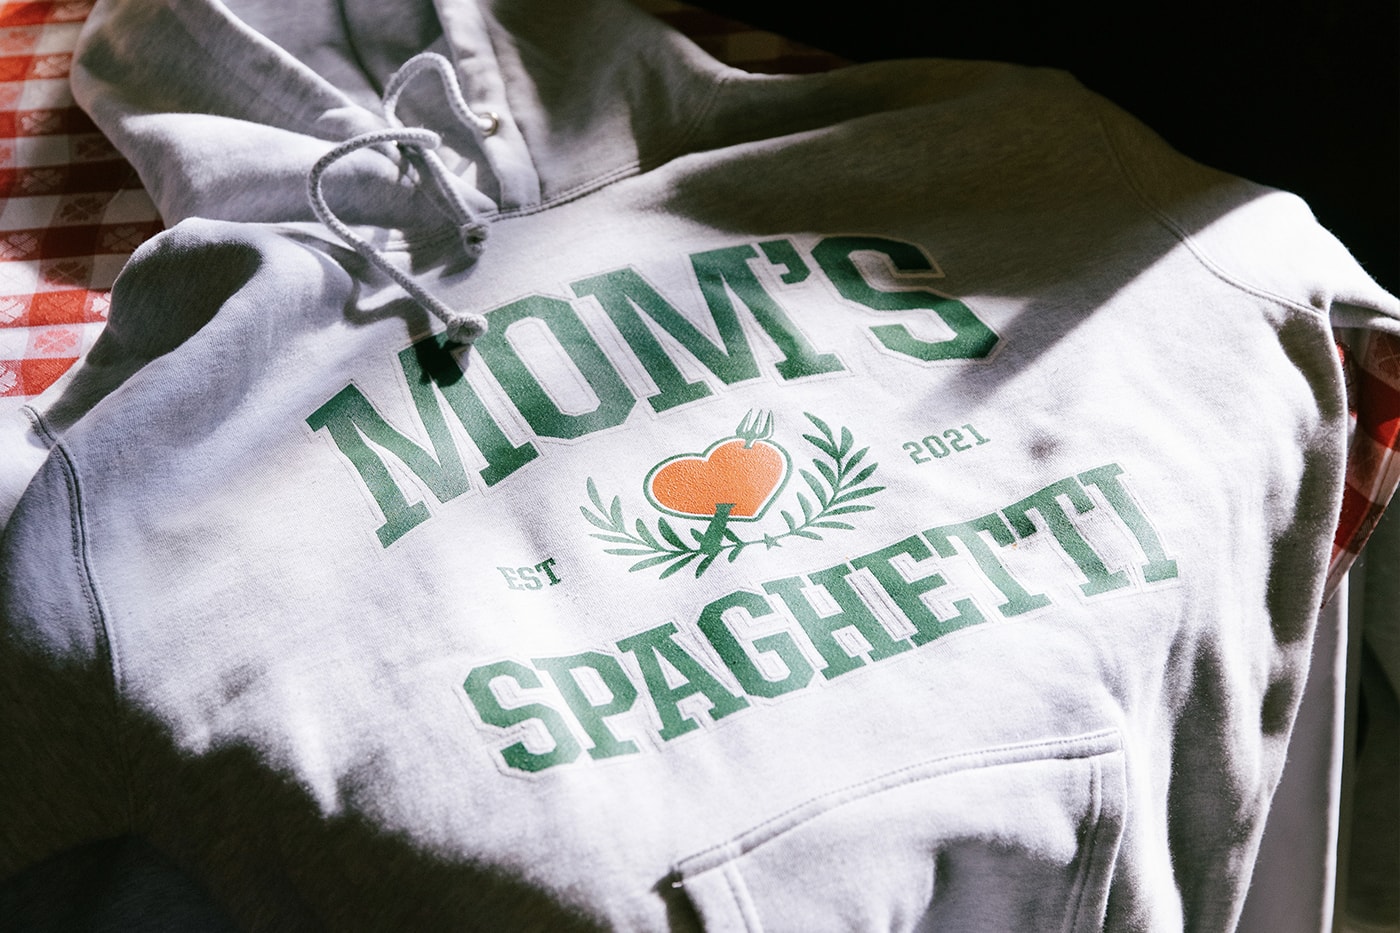 Eminem Mom's Spaghetti restaurant 2022 Soho NYC Pop-Up announcement info